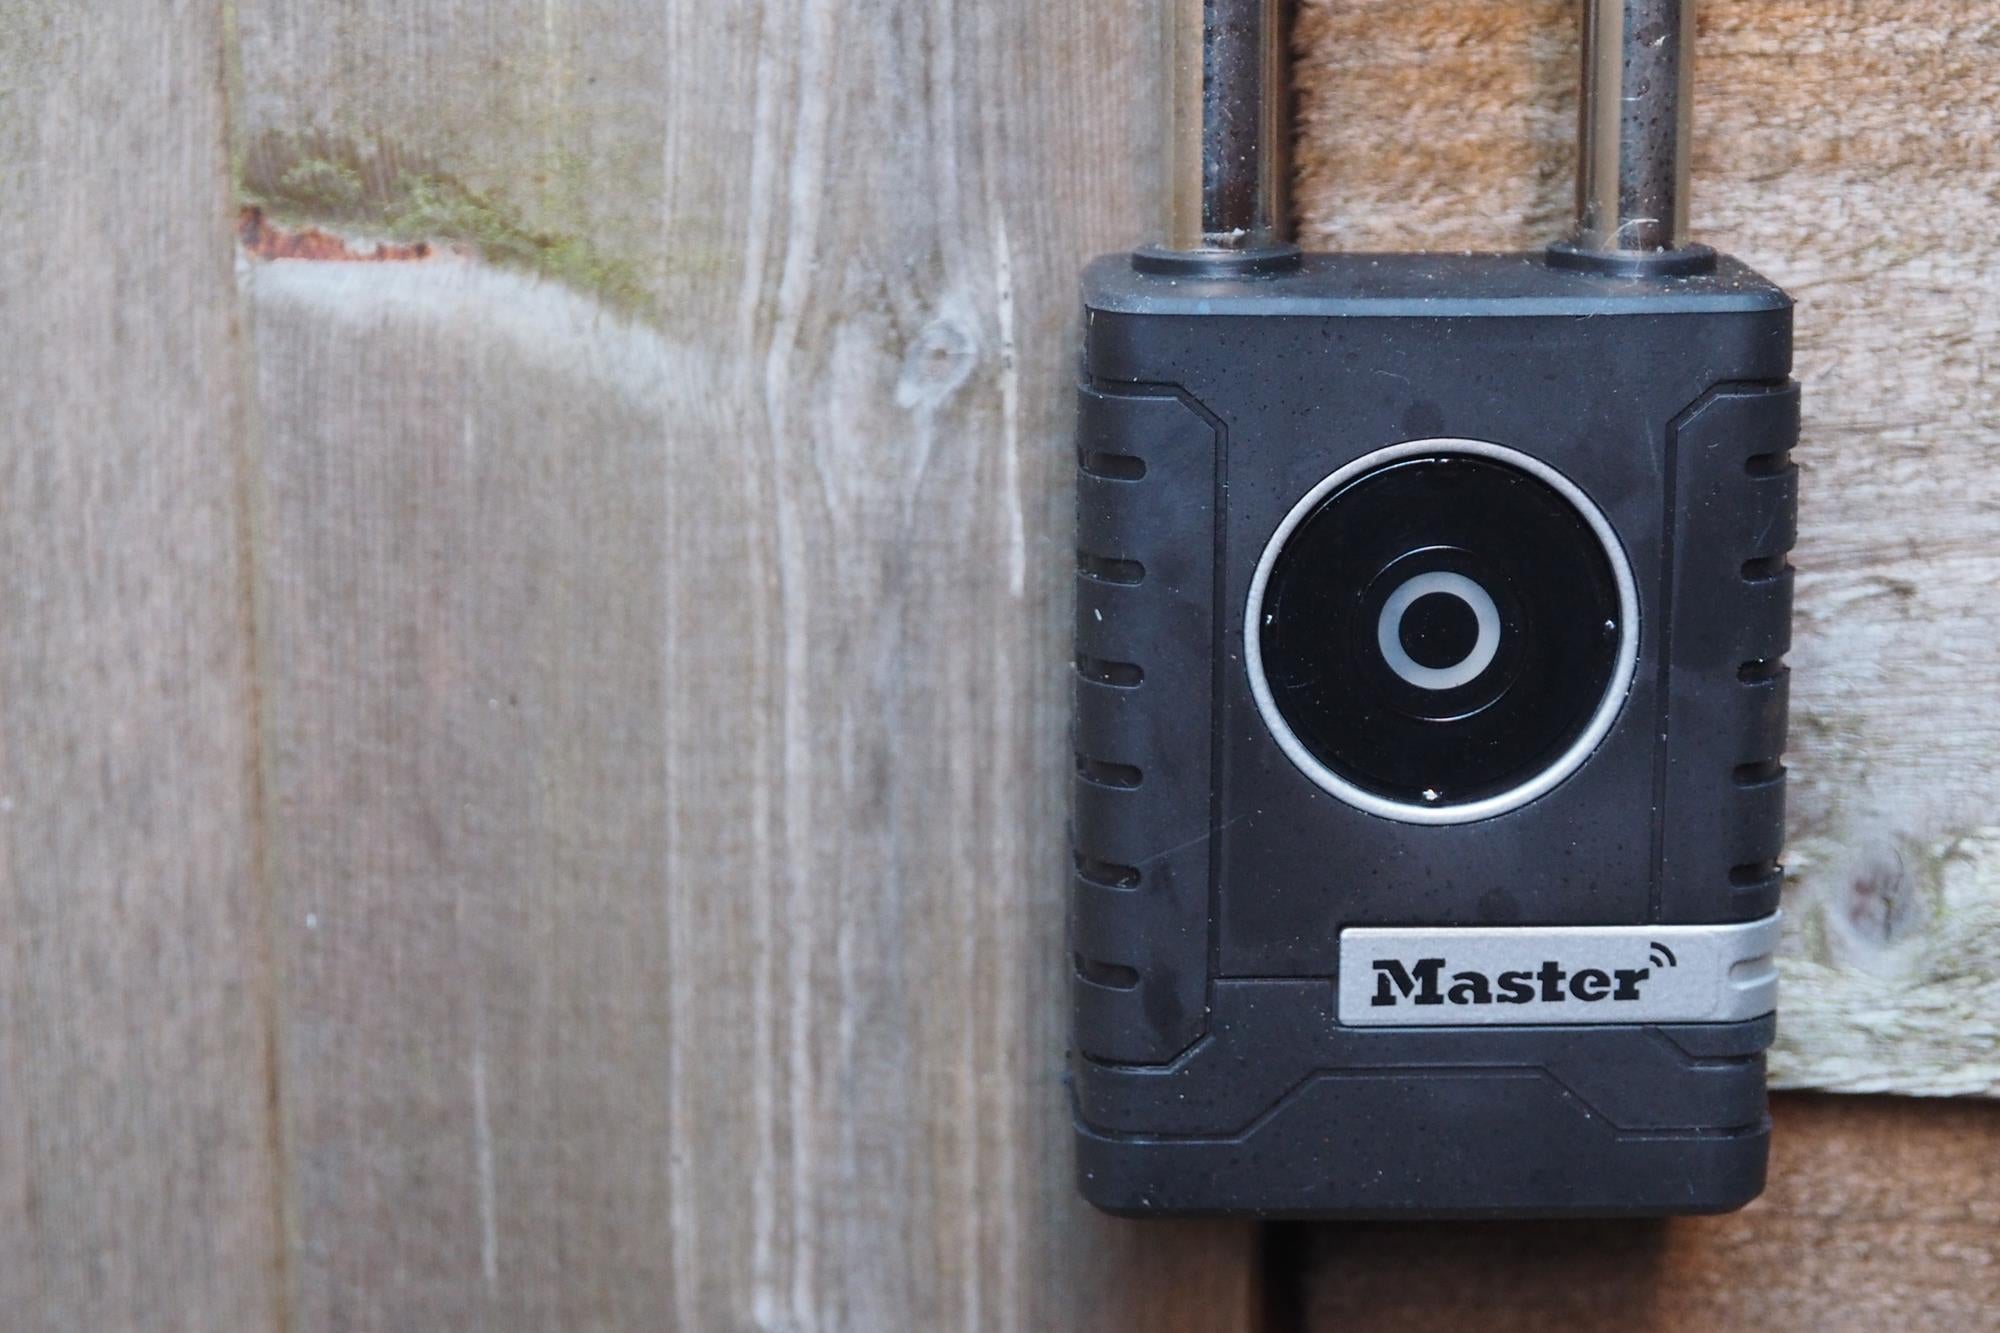 Master Lock Smart Outdoor Padlock on wooden background.